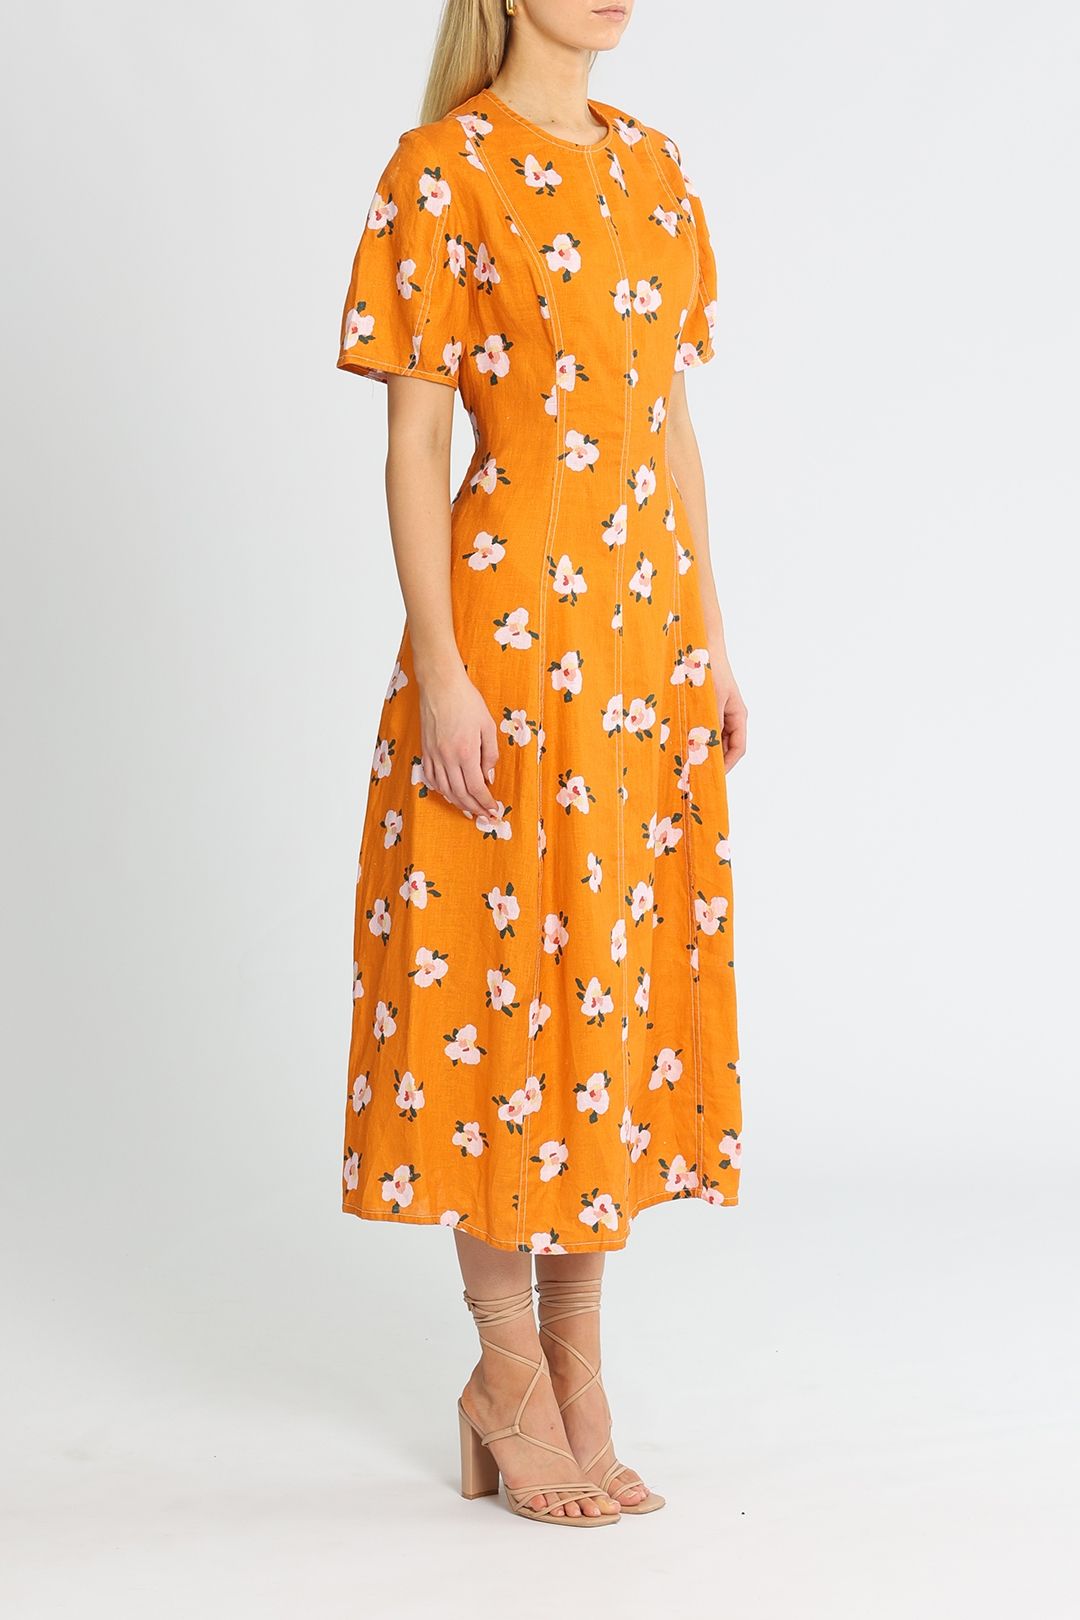 Kate Sylvester Colette Midi Dress in Orange Floral